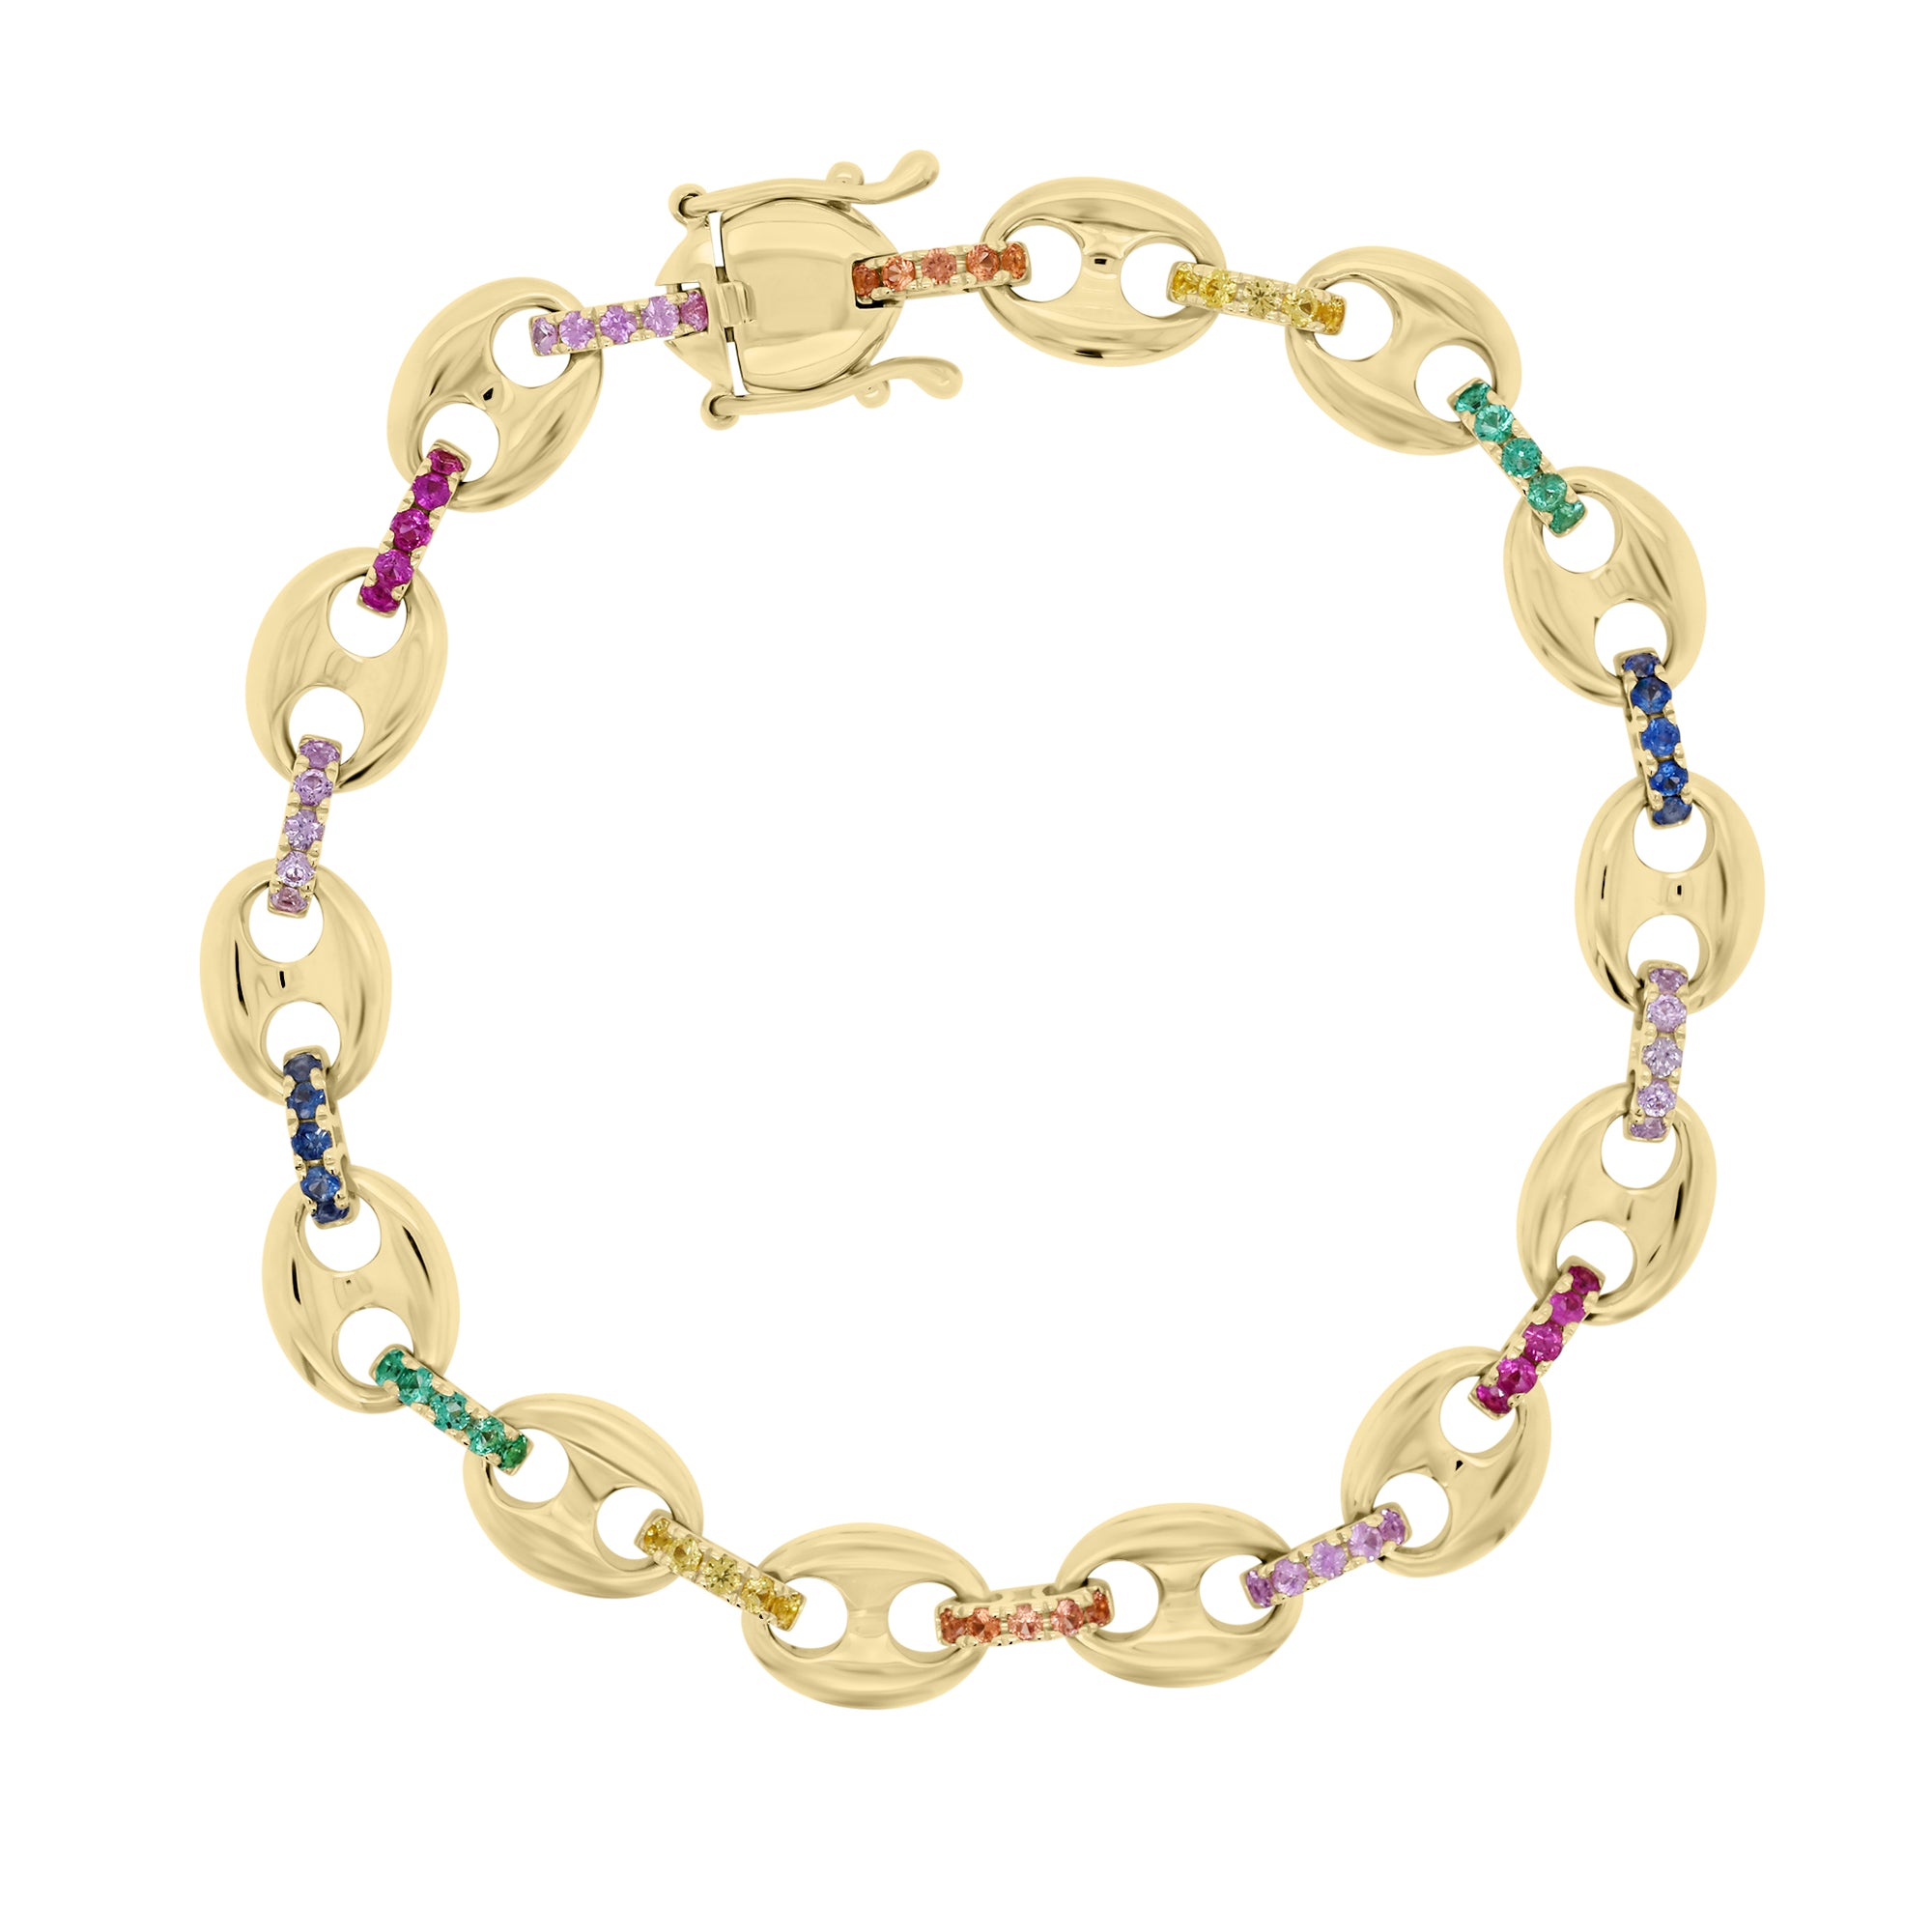 Multicolor Gemstone Tri-Link Bracelet - 14K yellow gold weighing 12.77 grams  - 70 multicolor gemstones totaling 1.32 carats